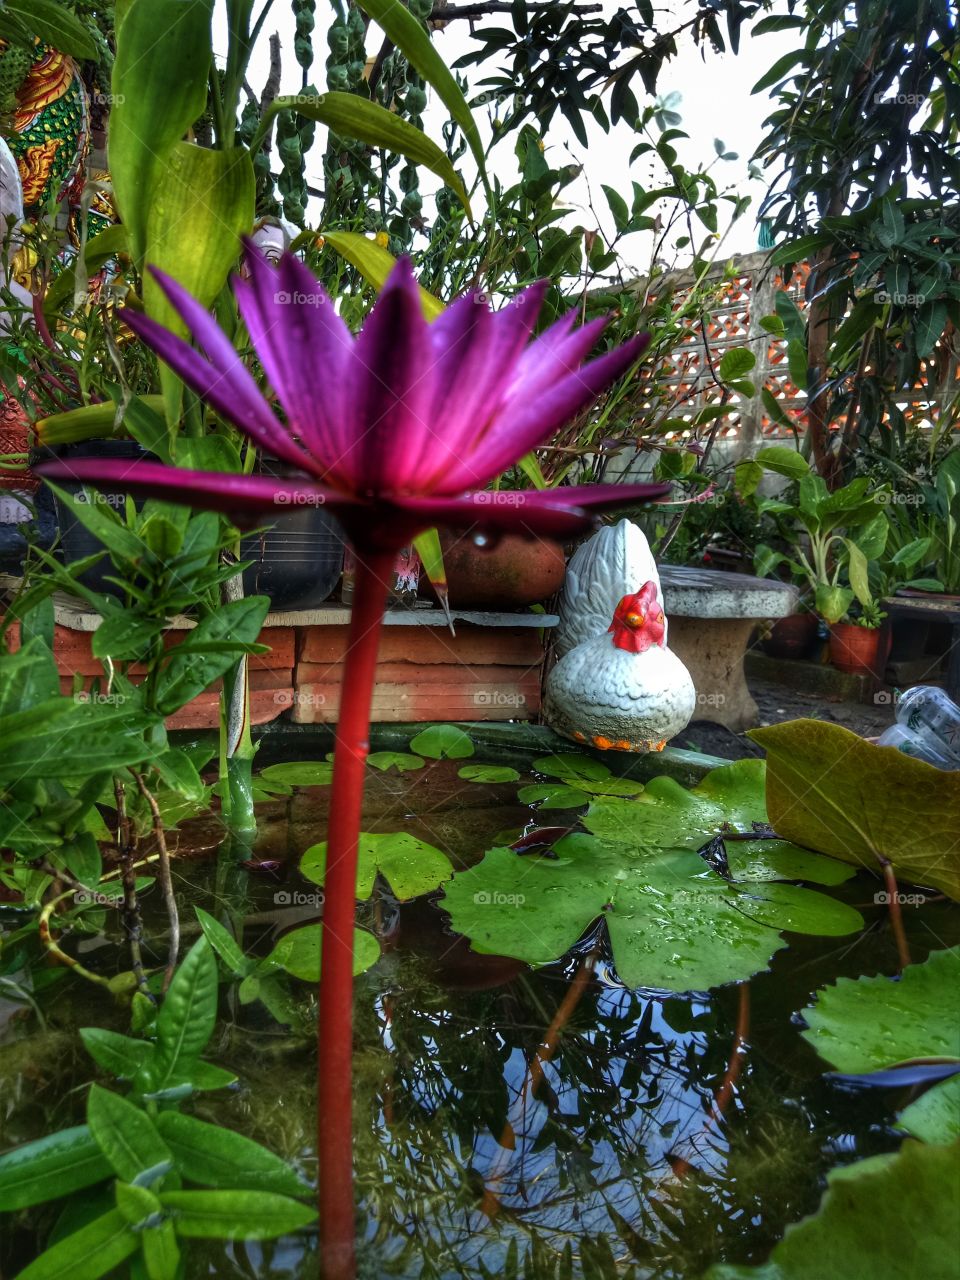 Lotus in the pot